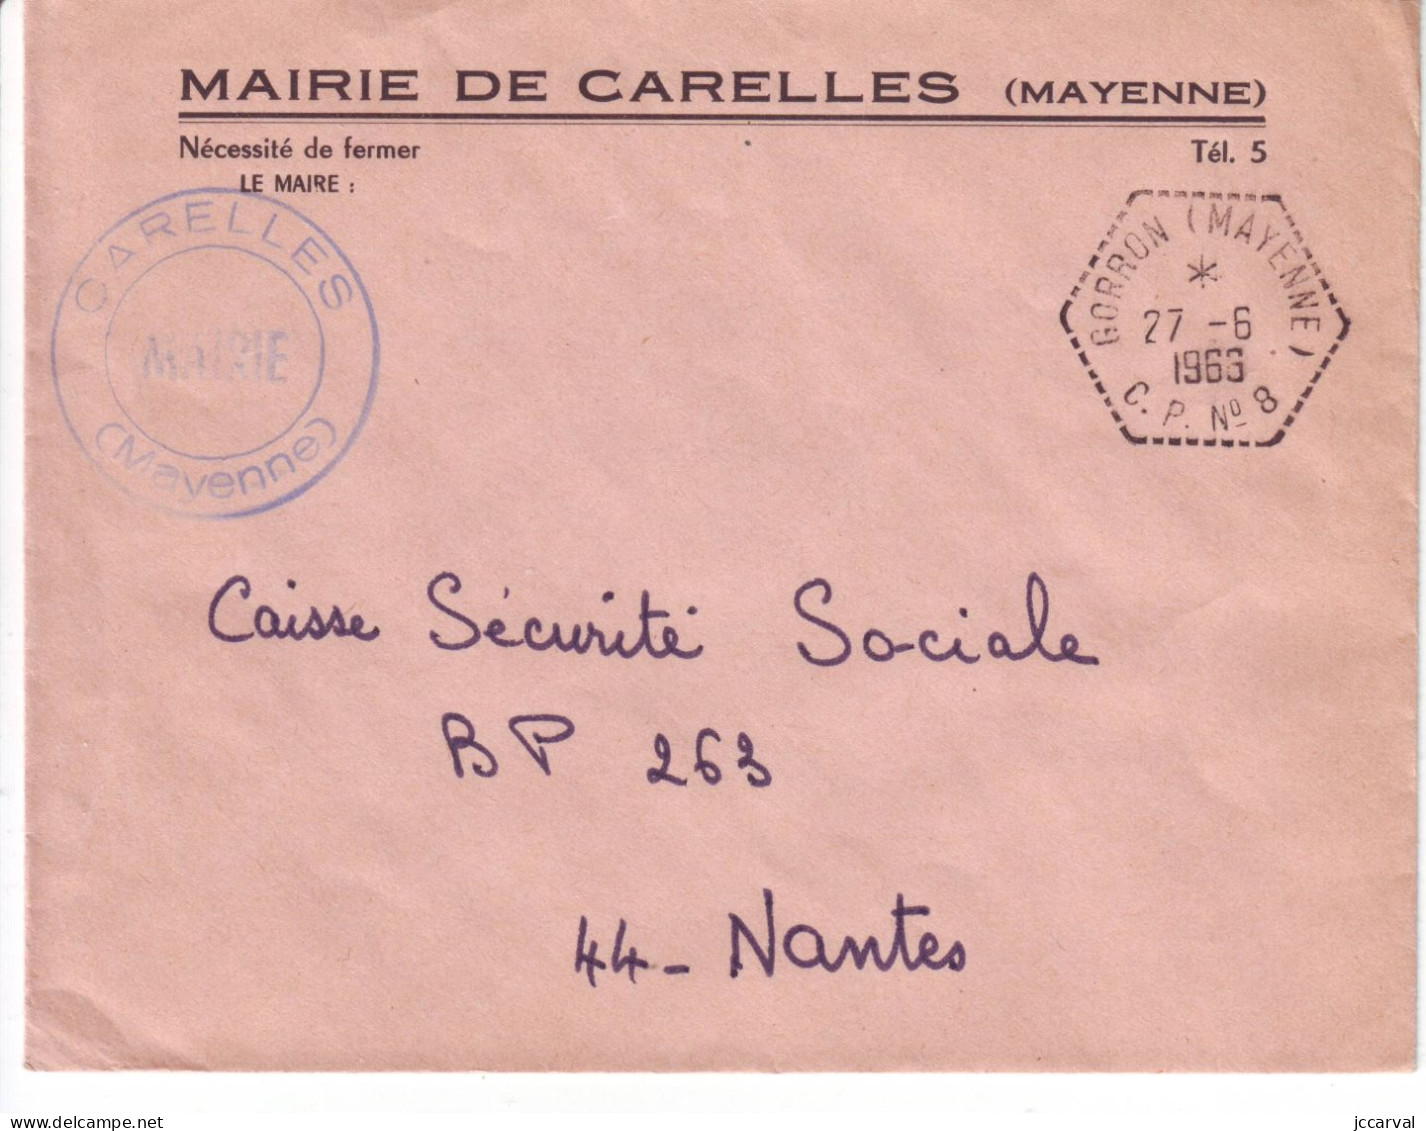 Mayenne Réseau Automobile Rural - Gorron CP N°8 - Type G7 - Carelles - Manual Postmarks